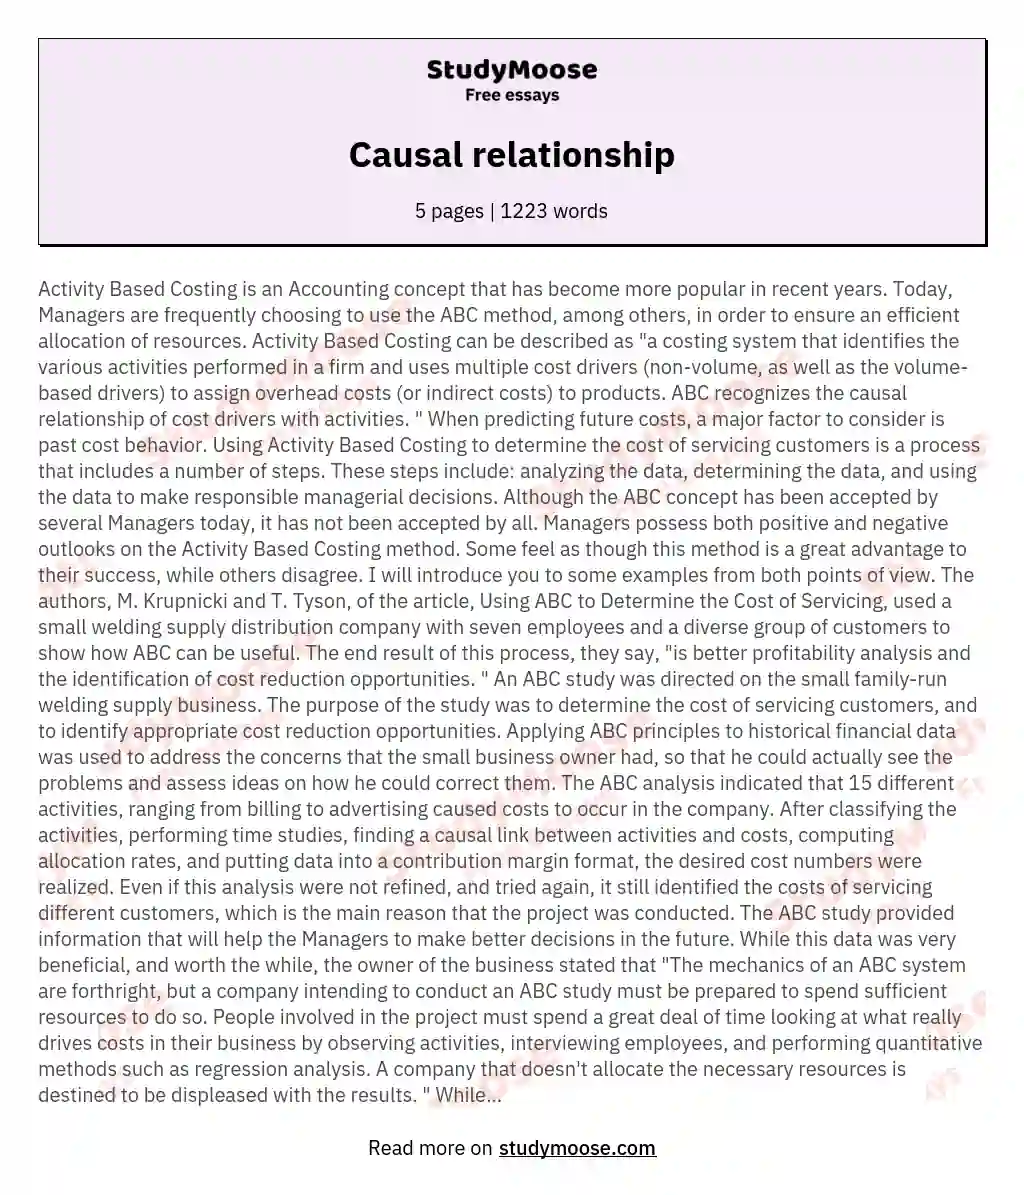 Causal relationship essay